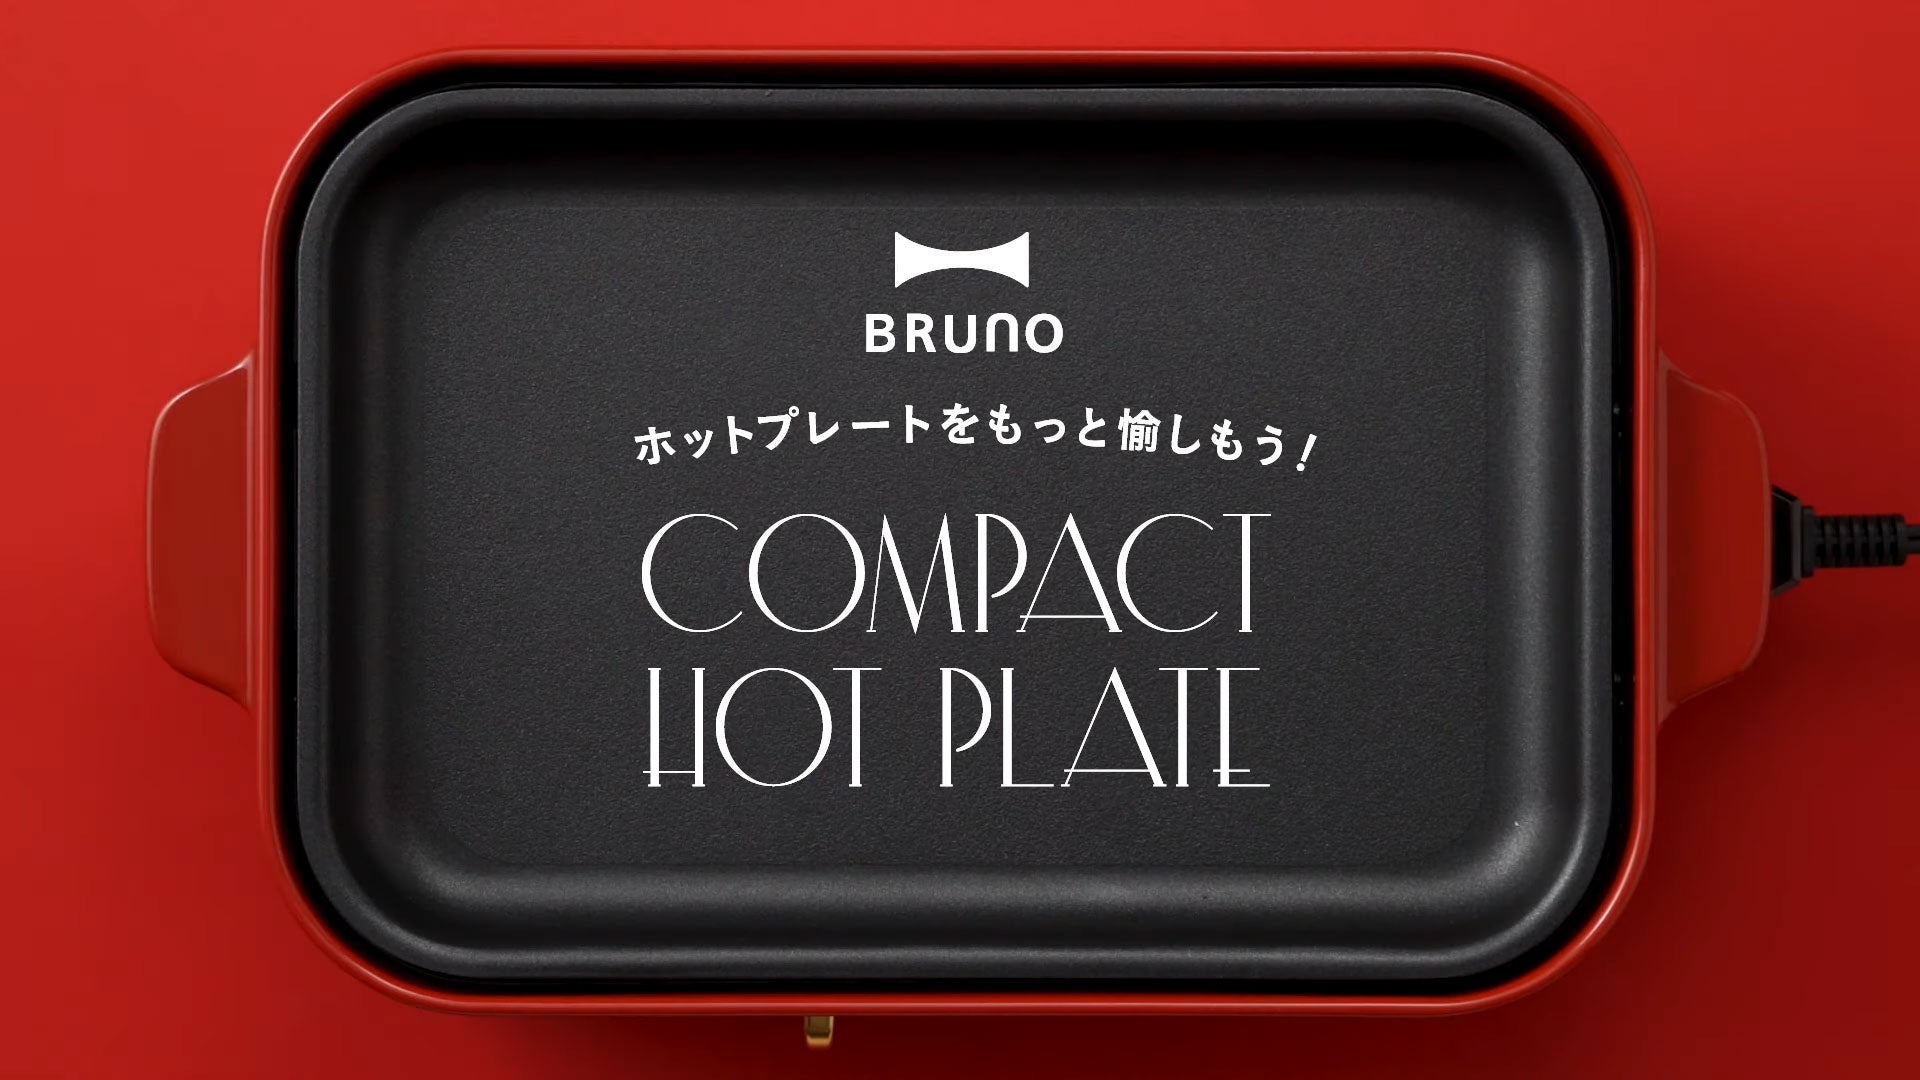 Bruno Malaysia Compact Hotplate Accessories